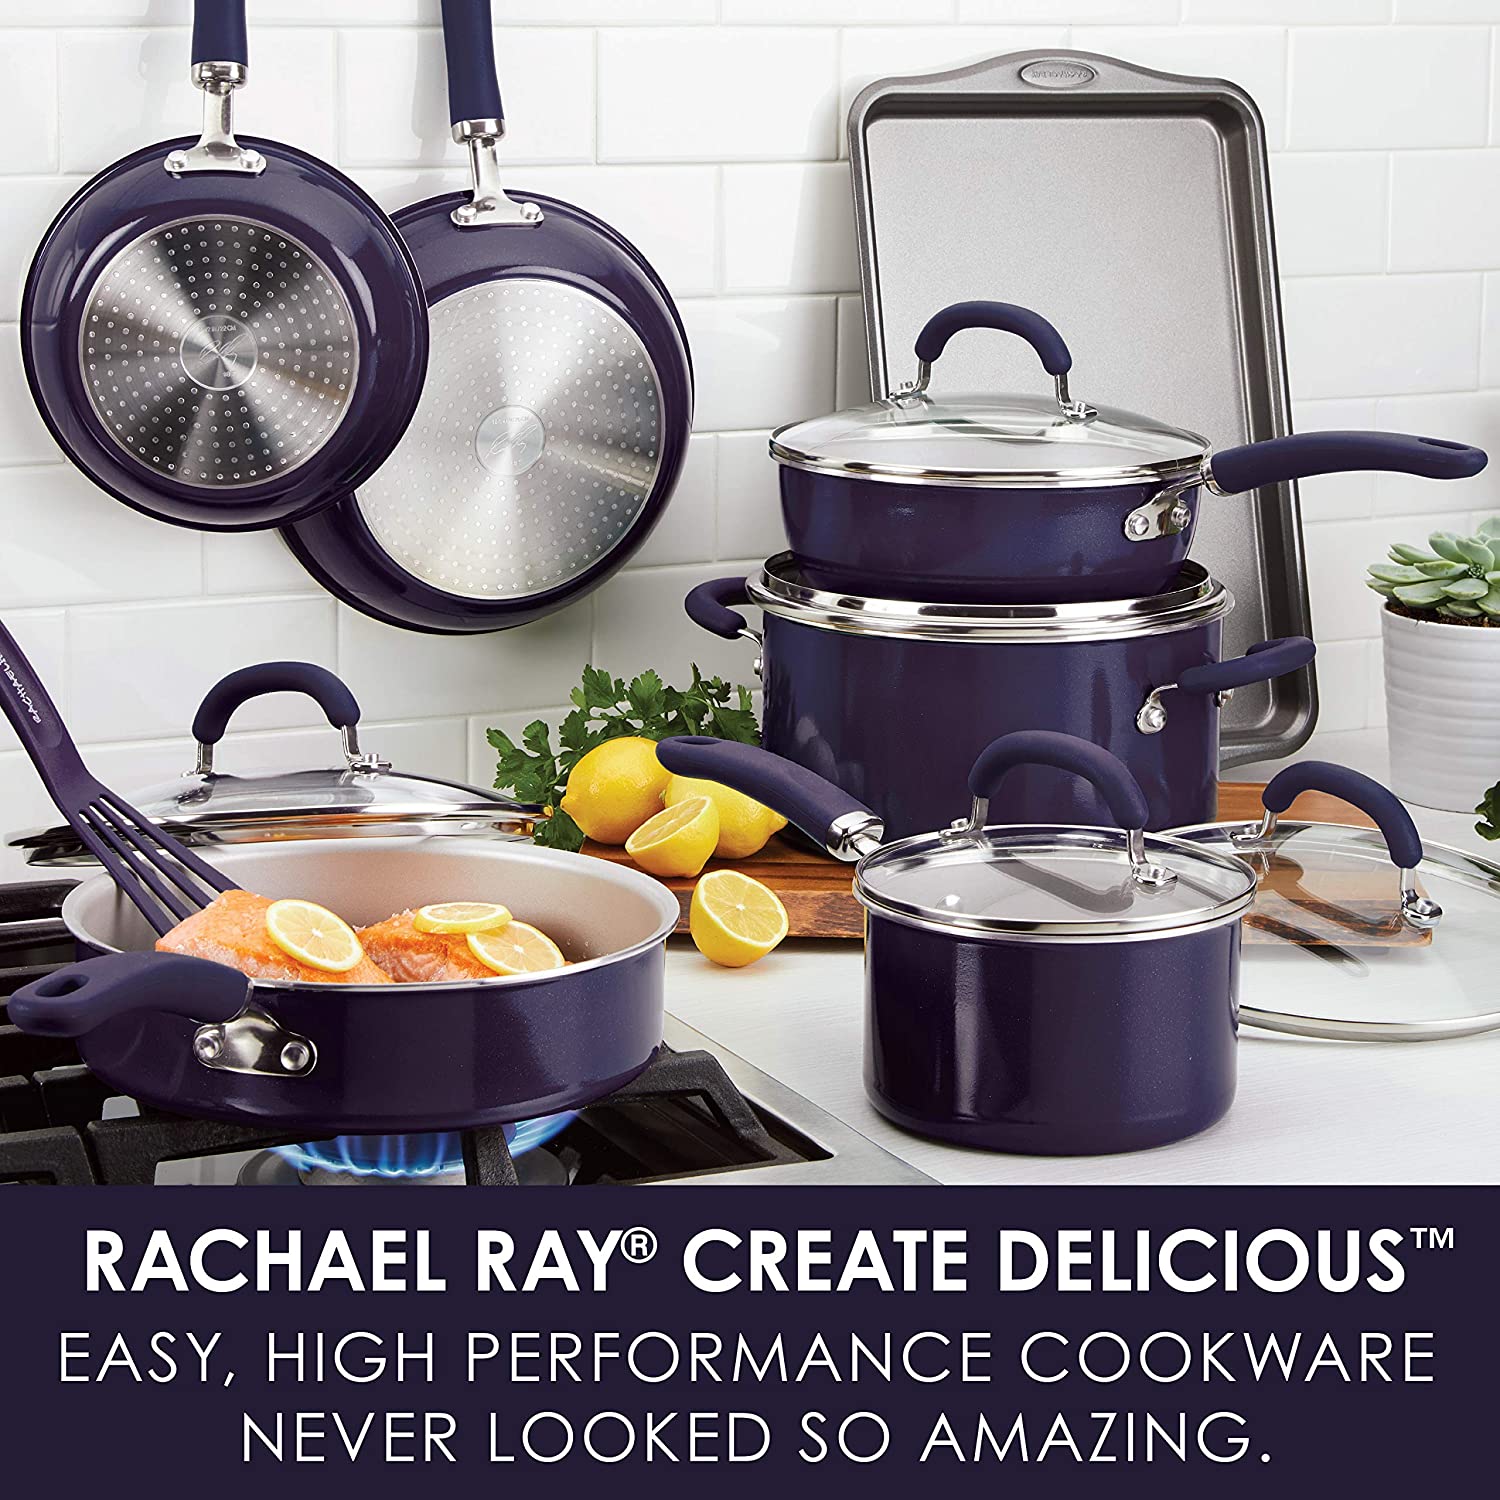 13-Piece Enameled Cookware Set - Light Blue Shimmer, Rachael Ray